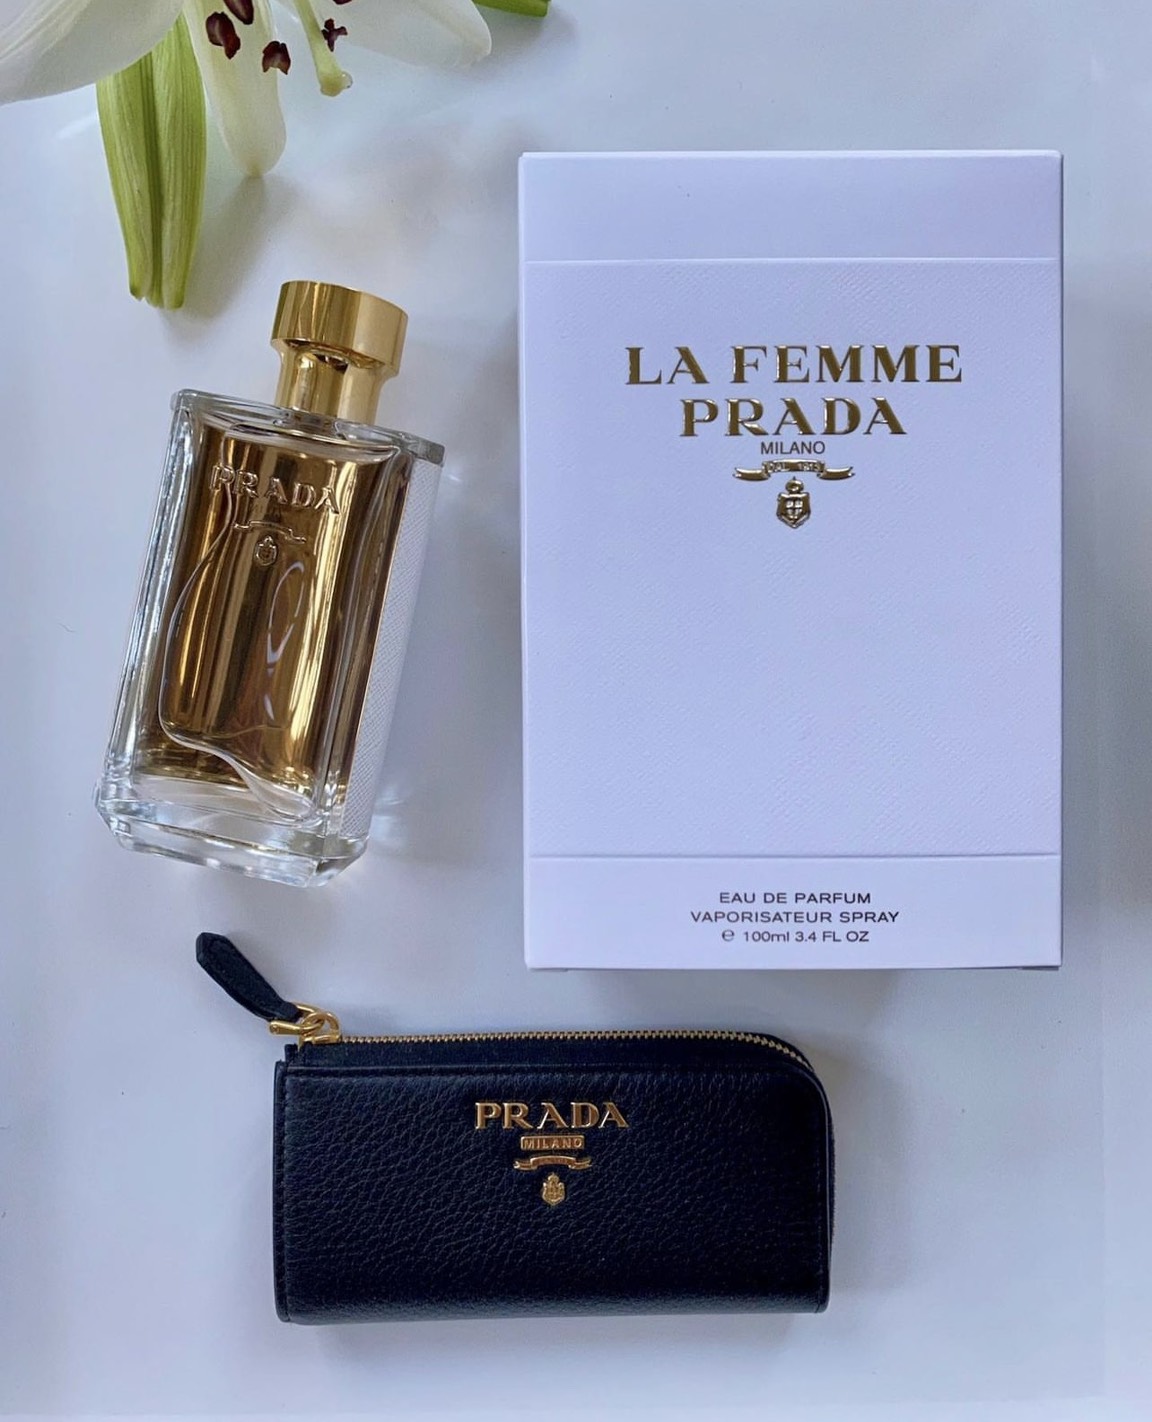 💥 Nước hoa mini nữ La Femme Prada 9ml - Nước hoa nữ | TheFaceHolic.com